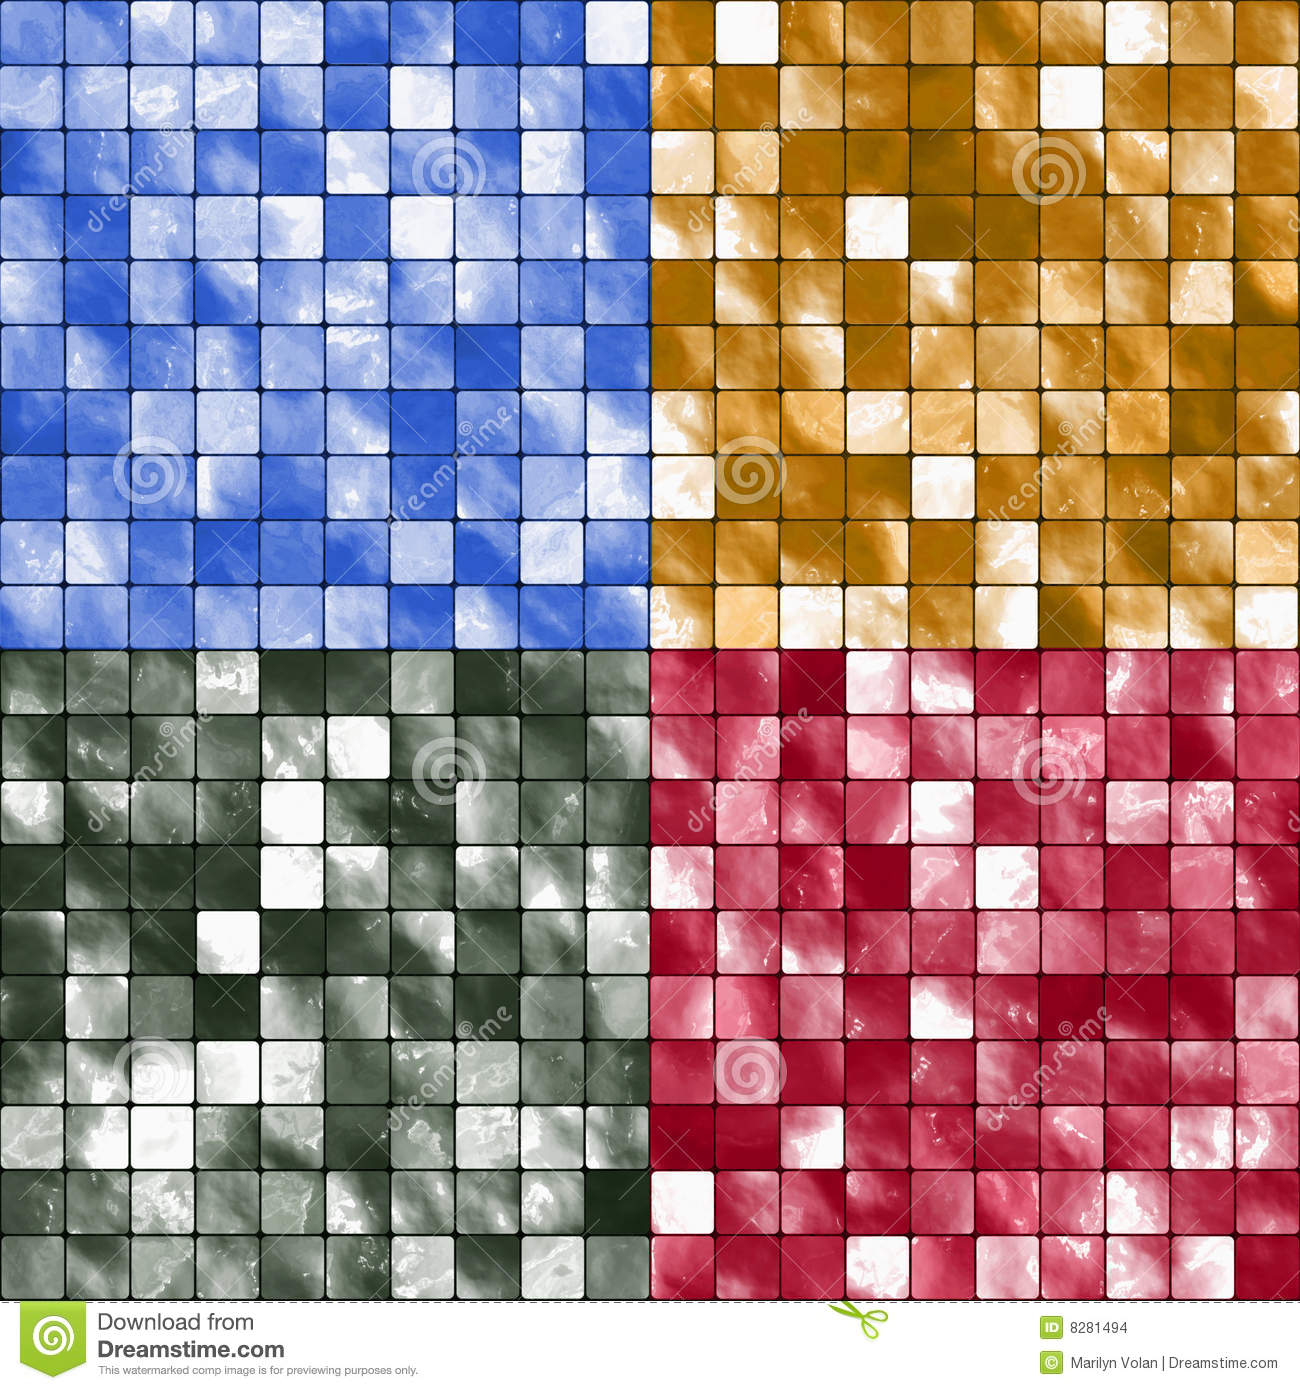 Dreamstime Stock Image Tile Mosaic Background Image8281494